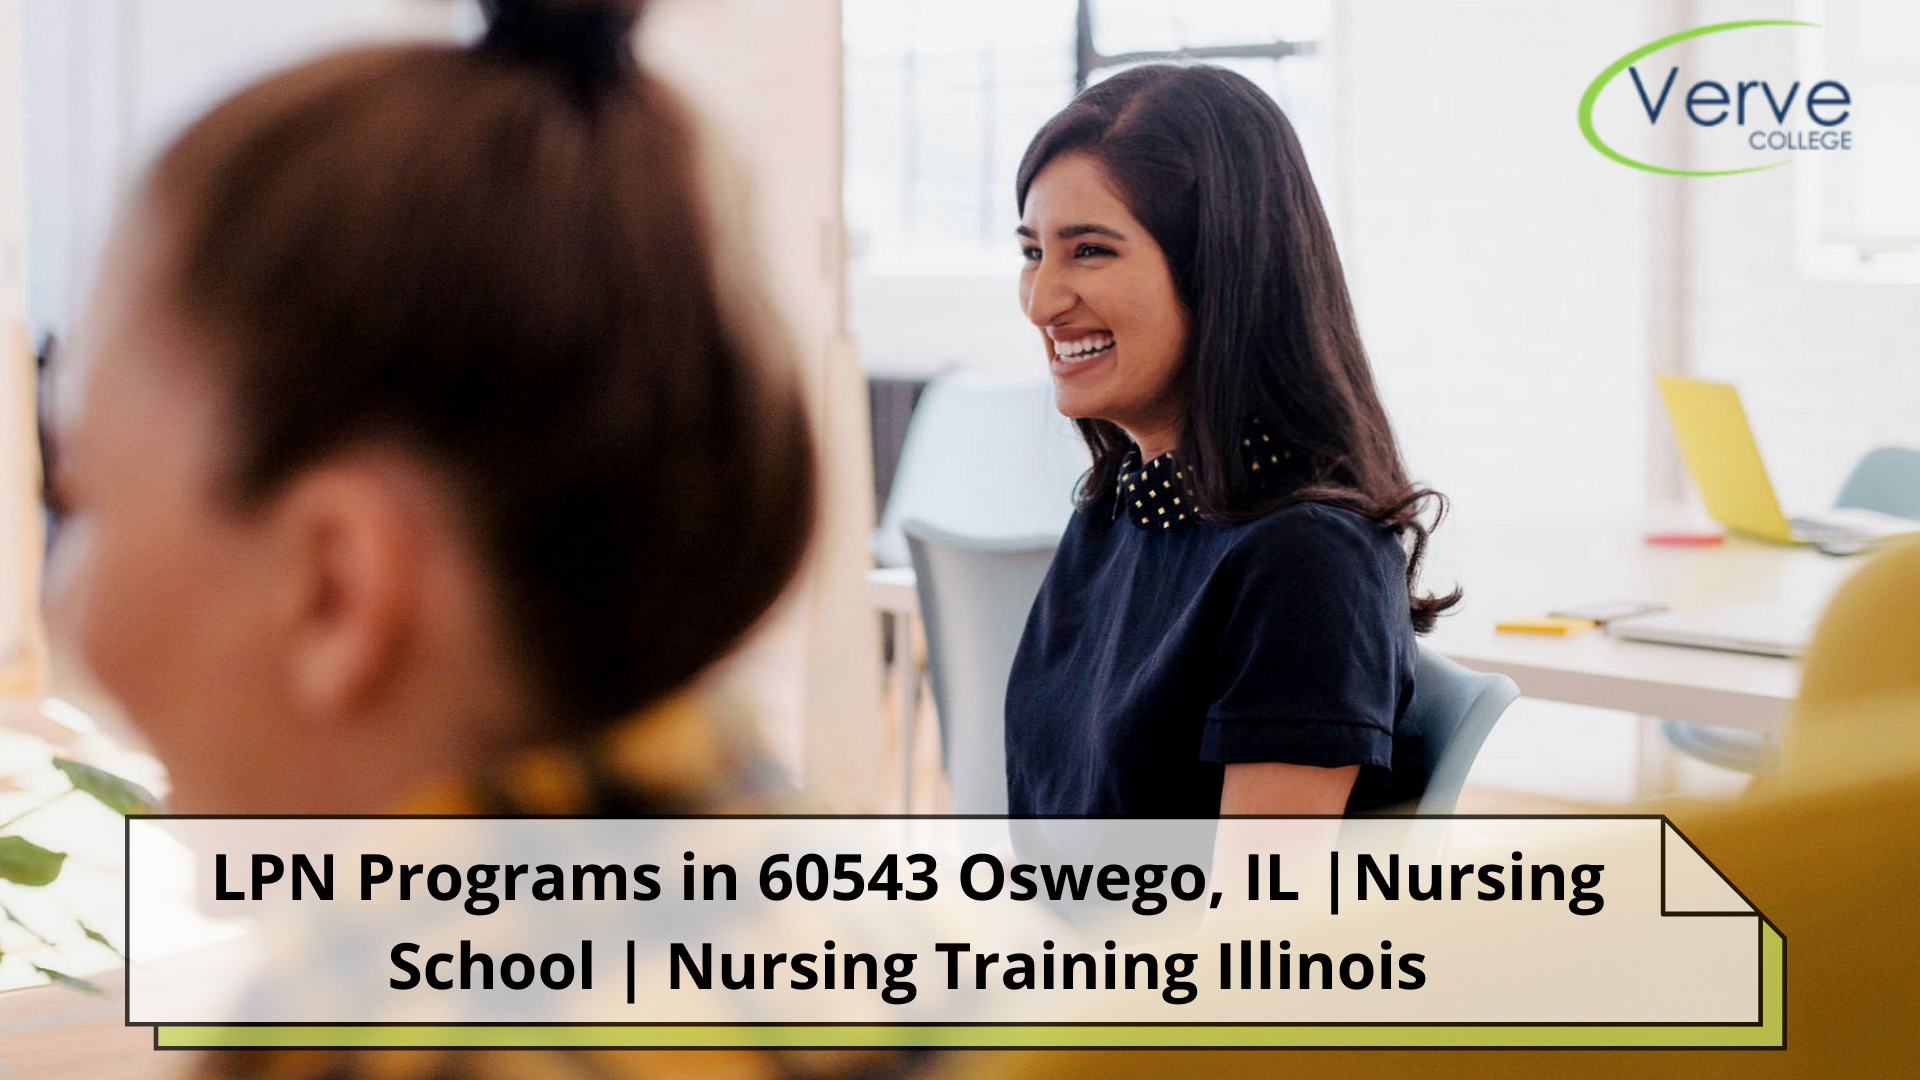 LPN Programs in 60543 Oswego, IL | Nursing School | Nursing Training Illinois